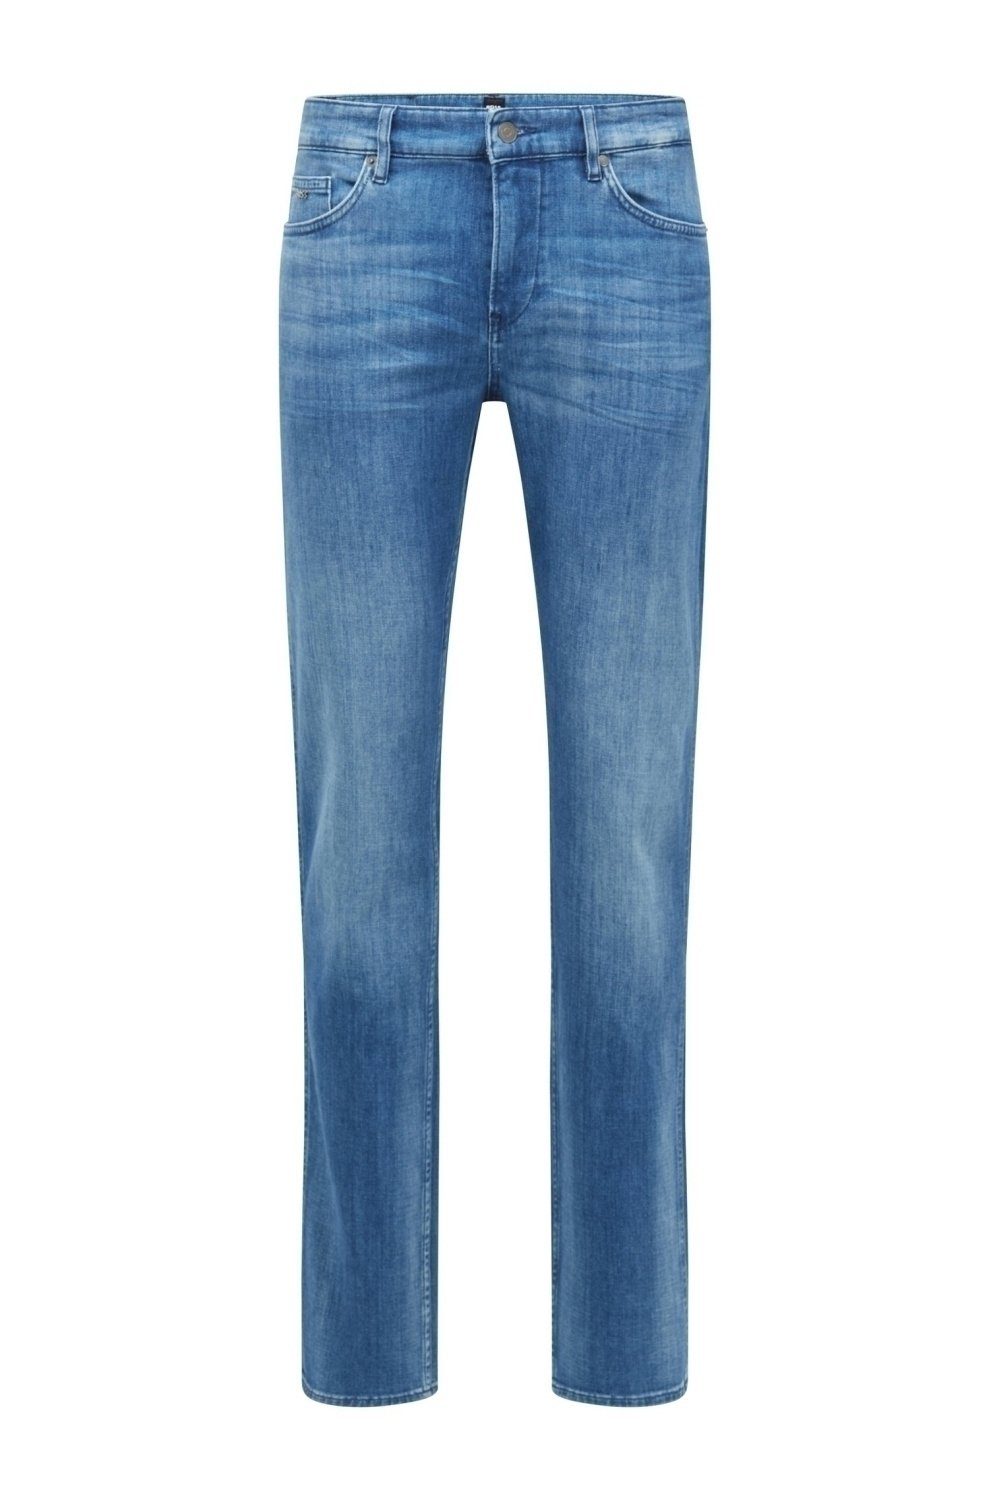 BOSS Jeans Denim aus mit Kaschmir-Haptik italienischem Slim-Fit 5-Pocket-Jeans